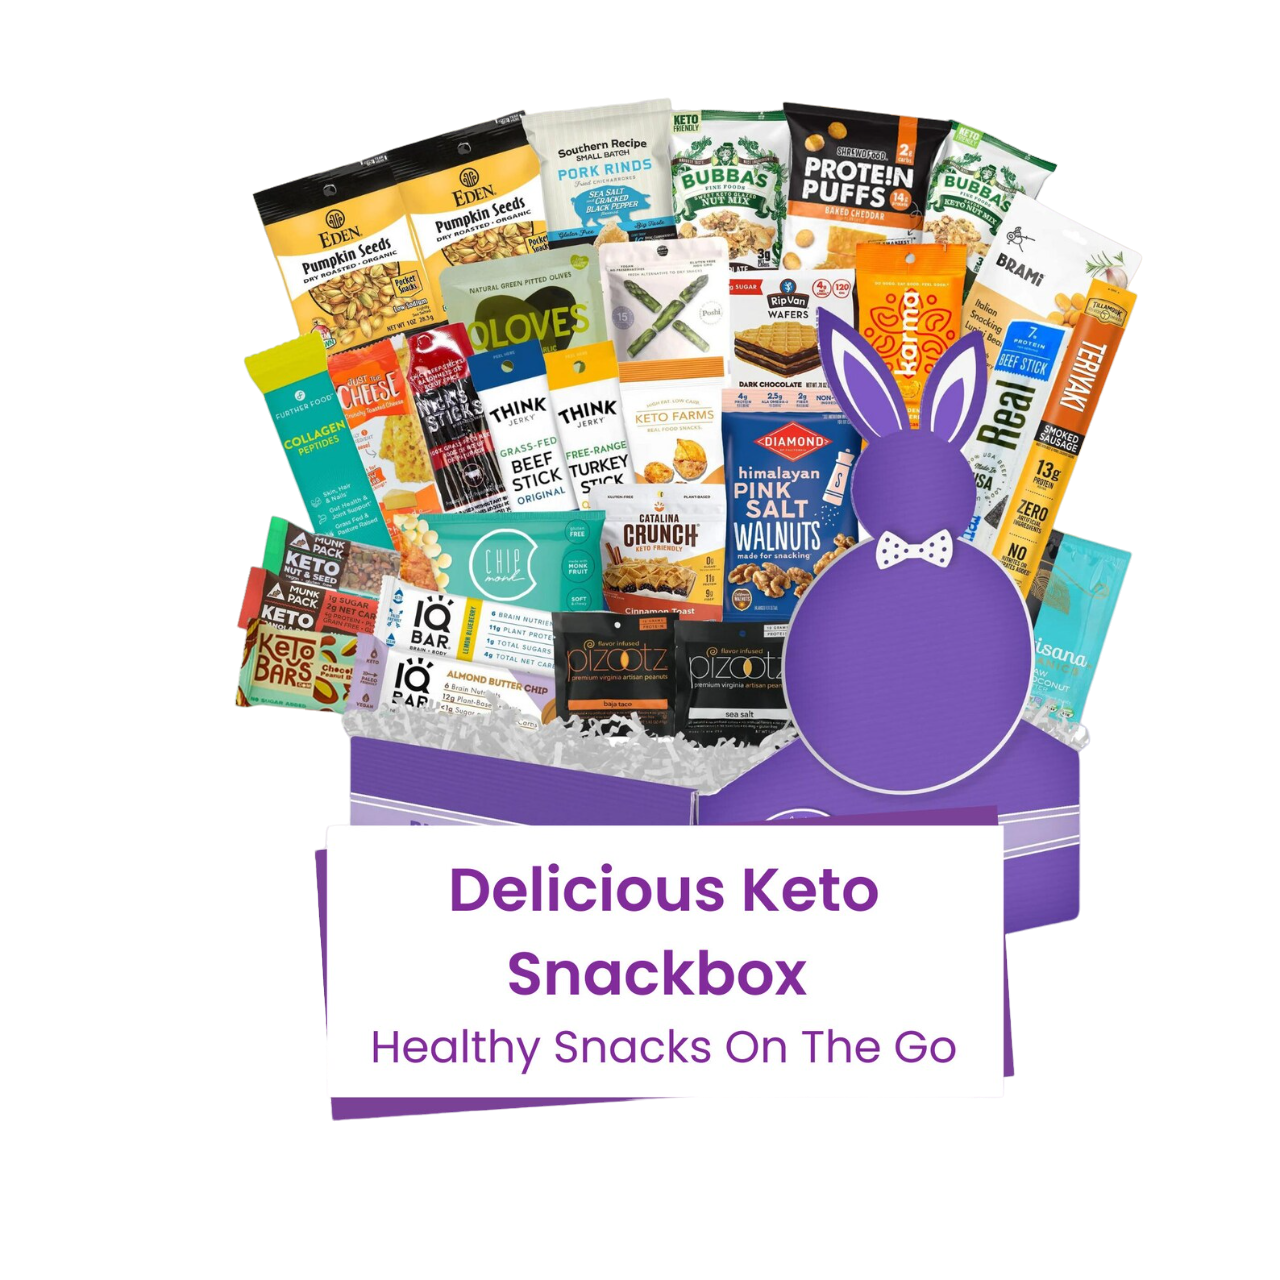 elicious Keto Snack Box